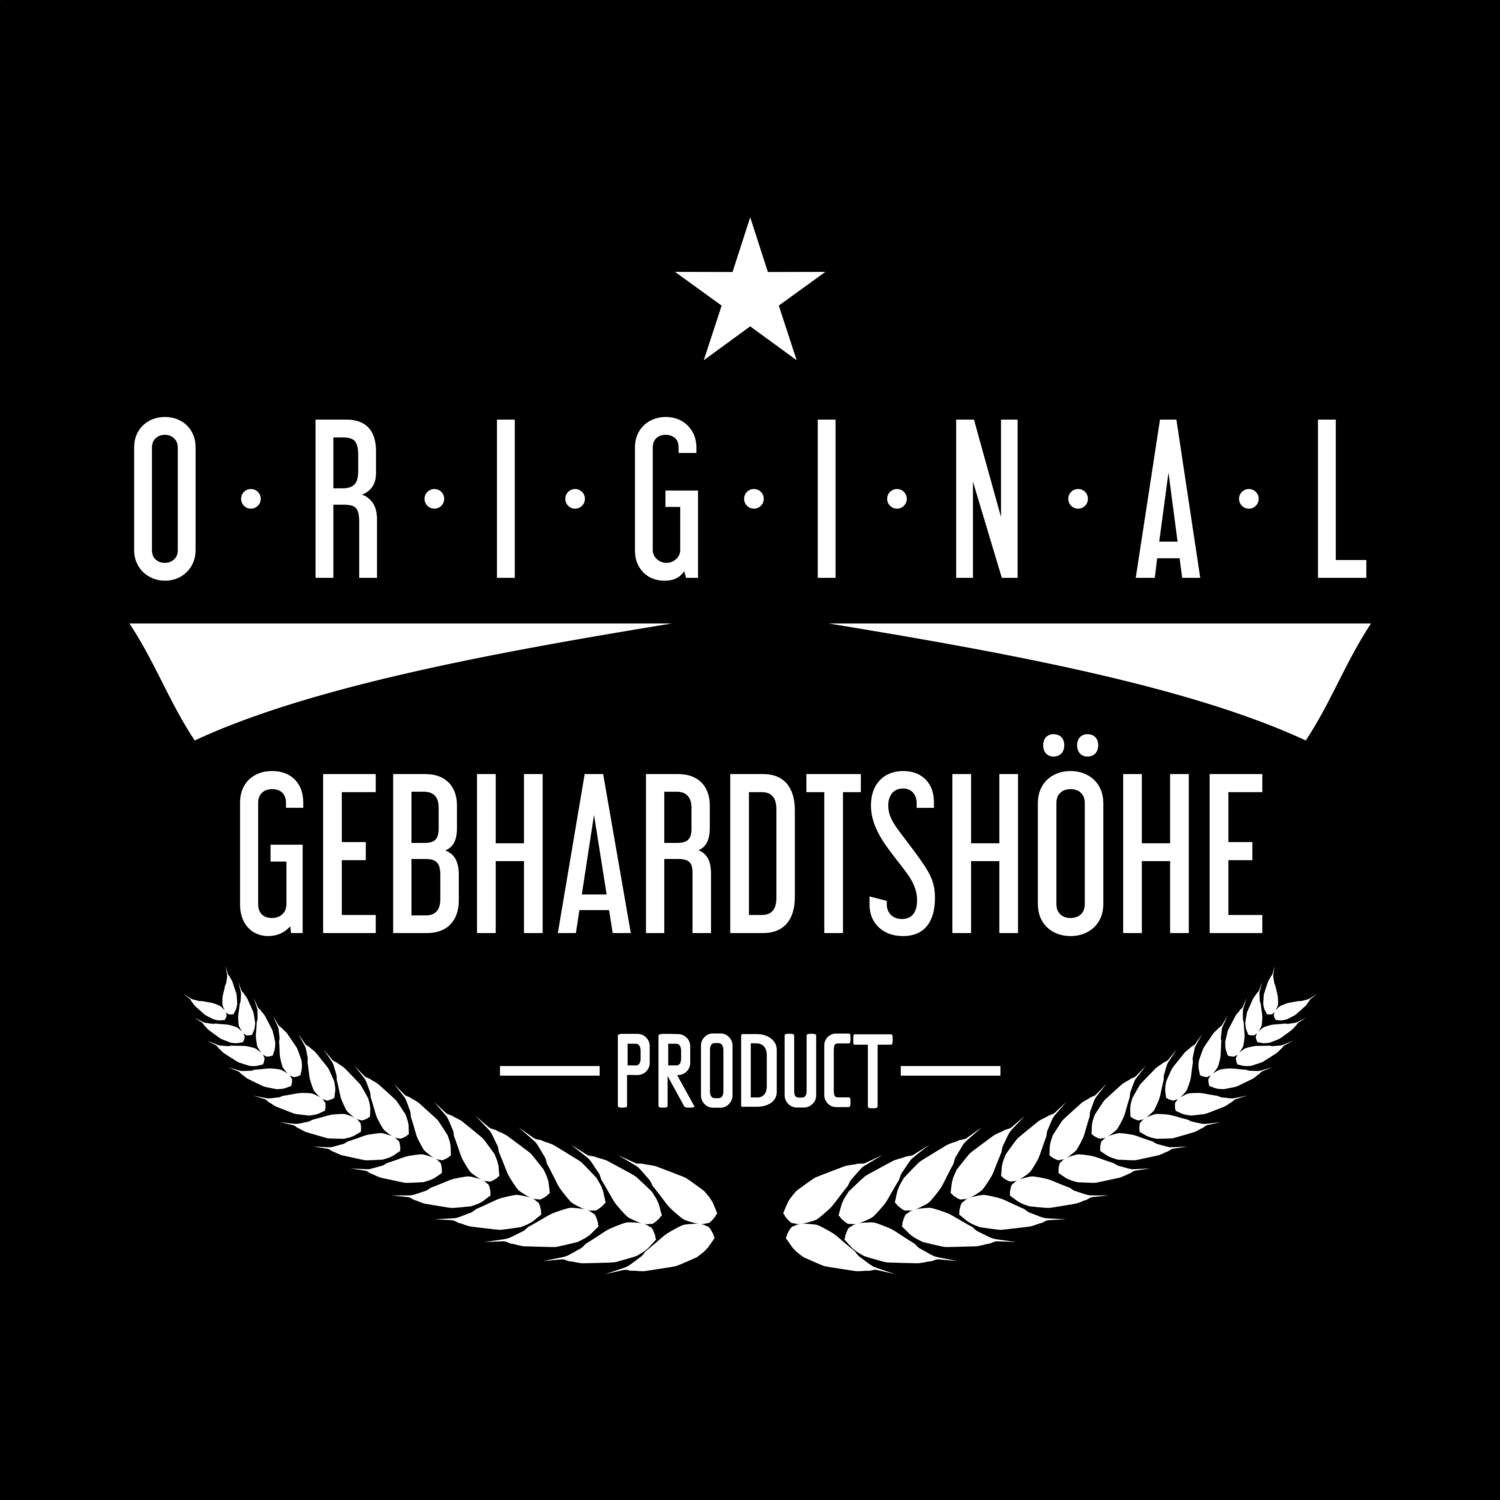 Gebhardtshöhe T-Shirt »Original Product«